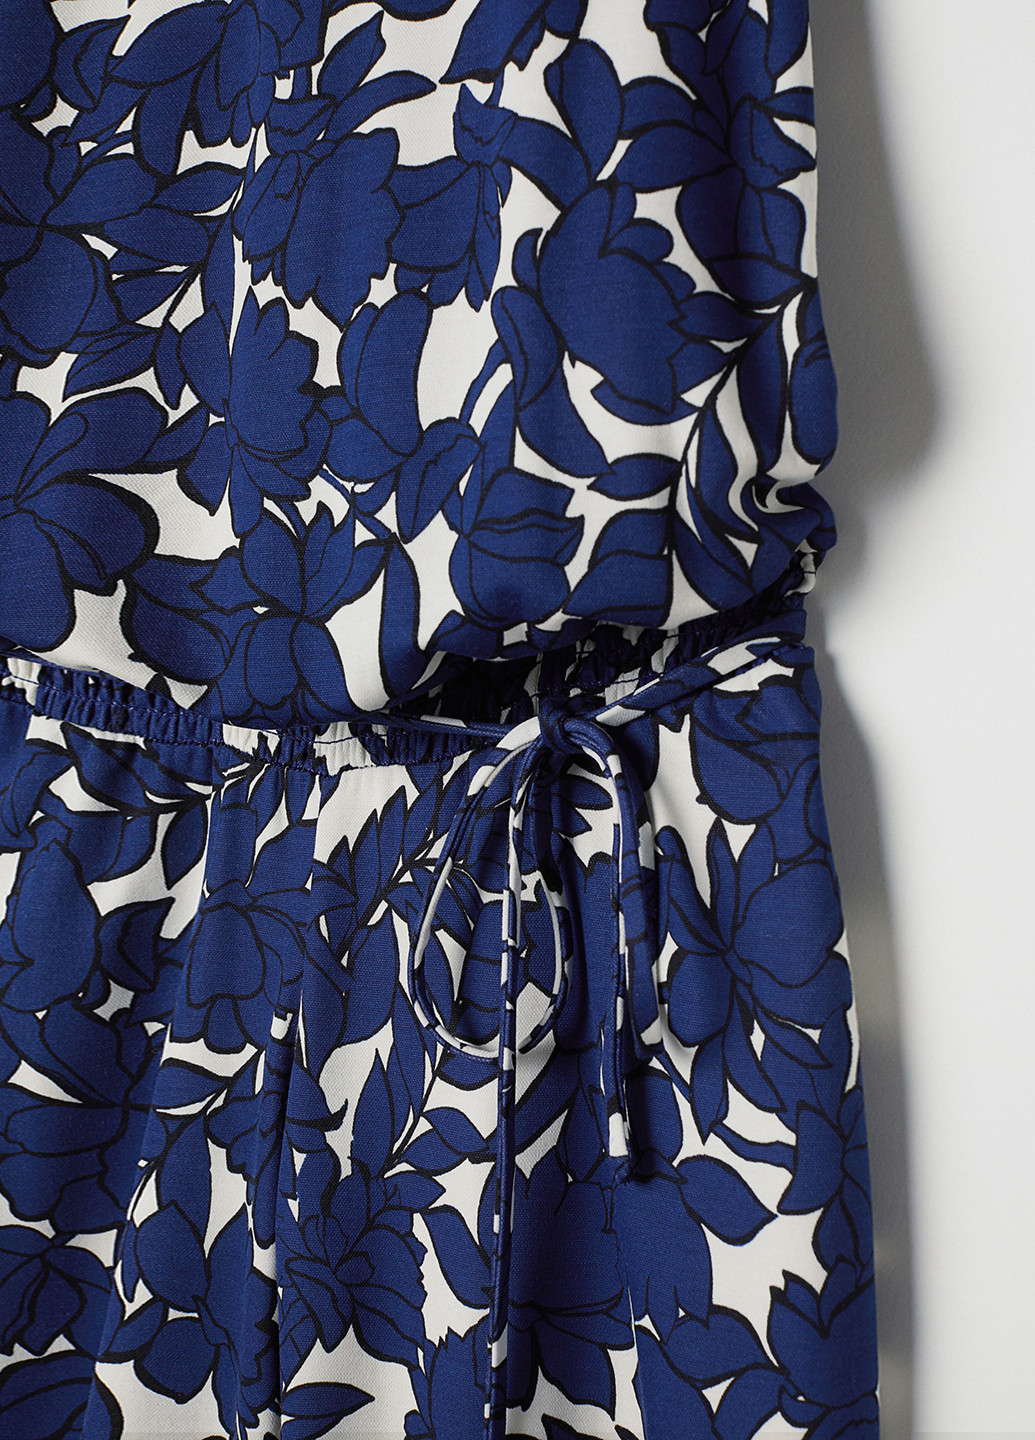 Комбинезон H&M комбинезон-брюки цветочный синий кэжуал модал